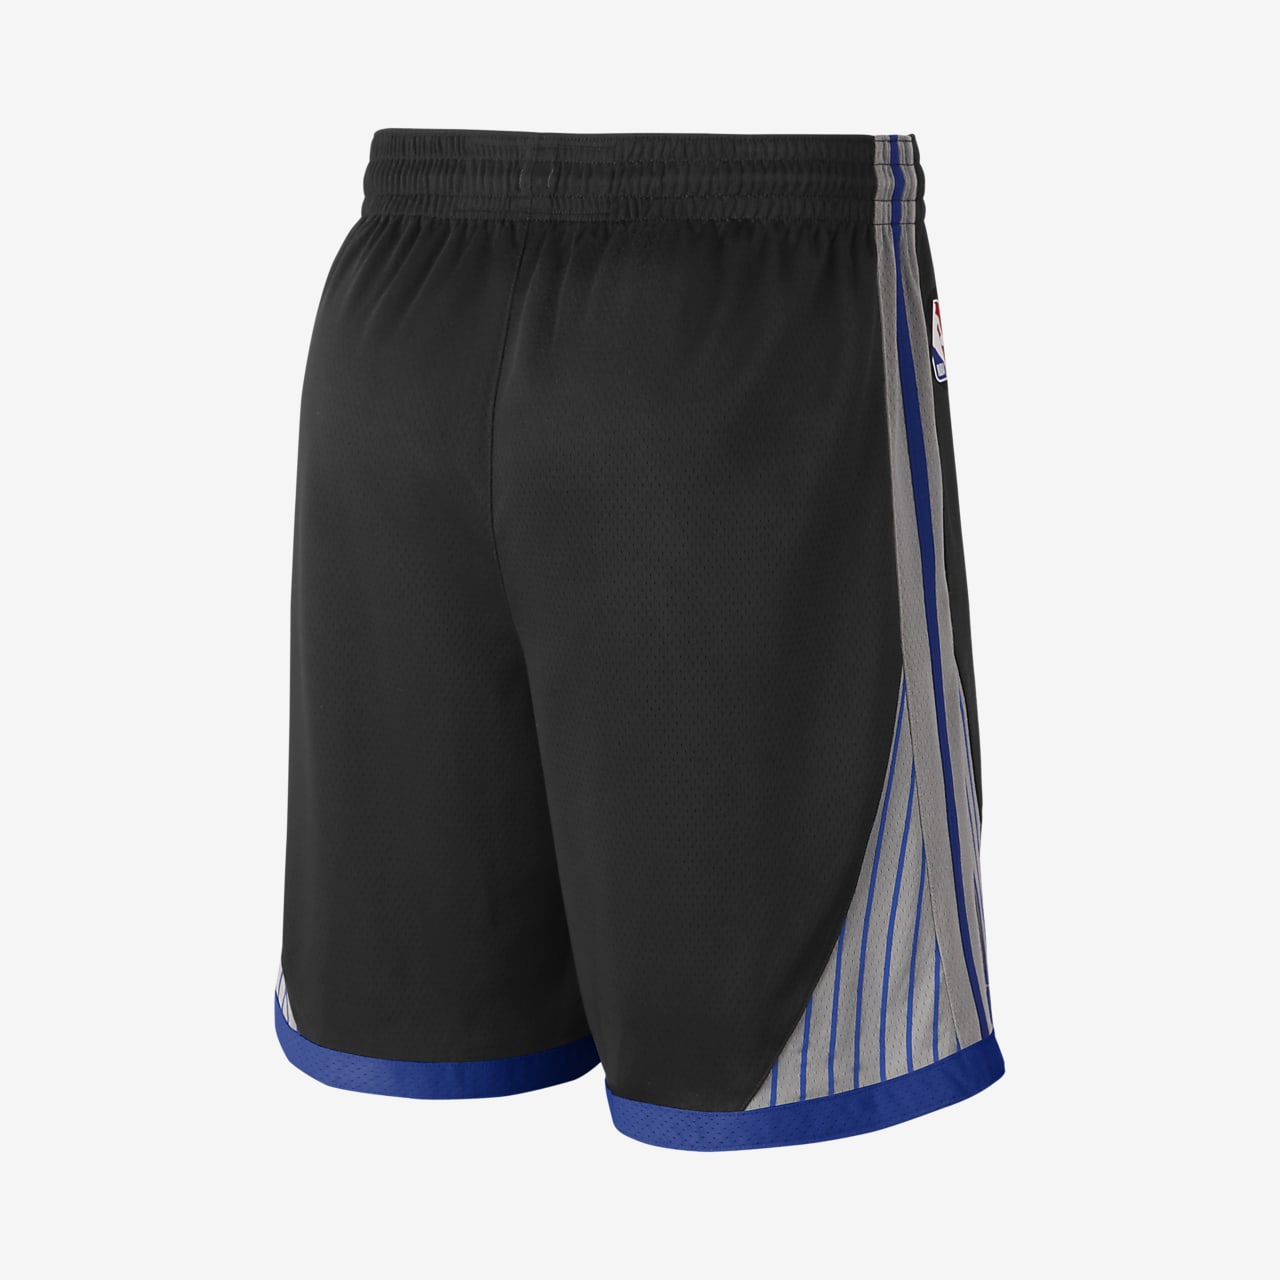 RUSH Adidas Golden State Warriors Jersey Shorts Medium, Men's